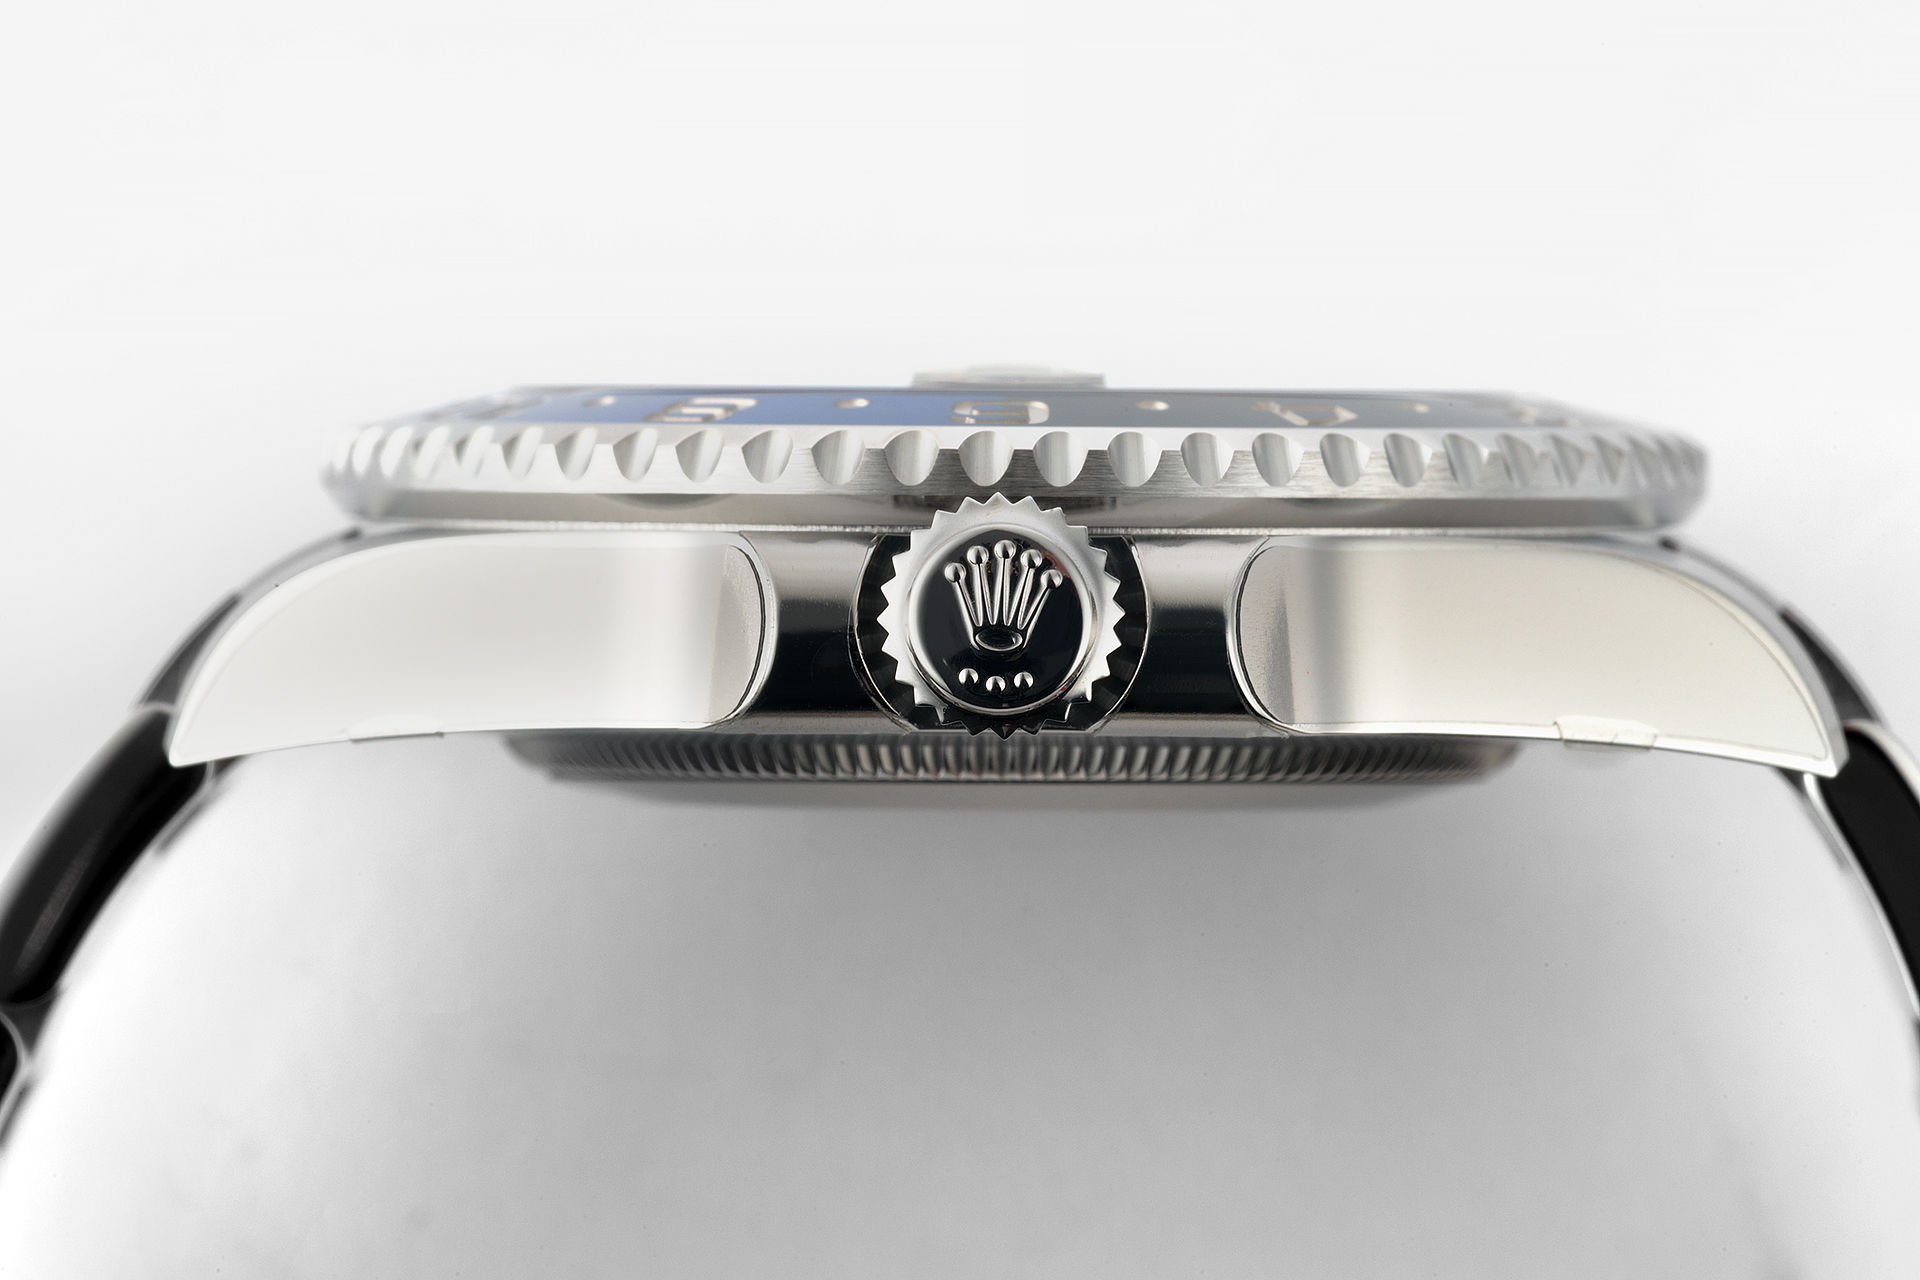 ref 116710BLNR | Brand New '5 Year Warranty' | Rolex GMT-Master II